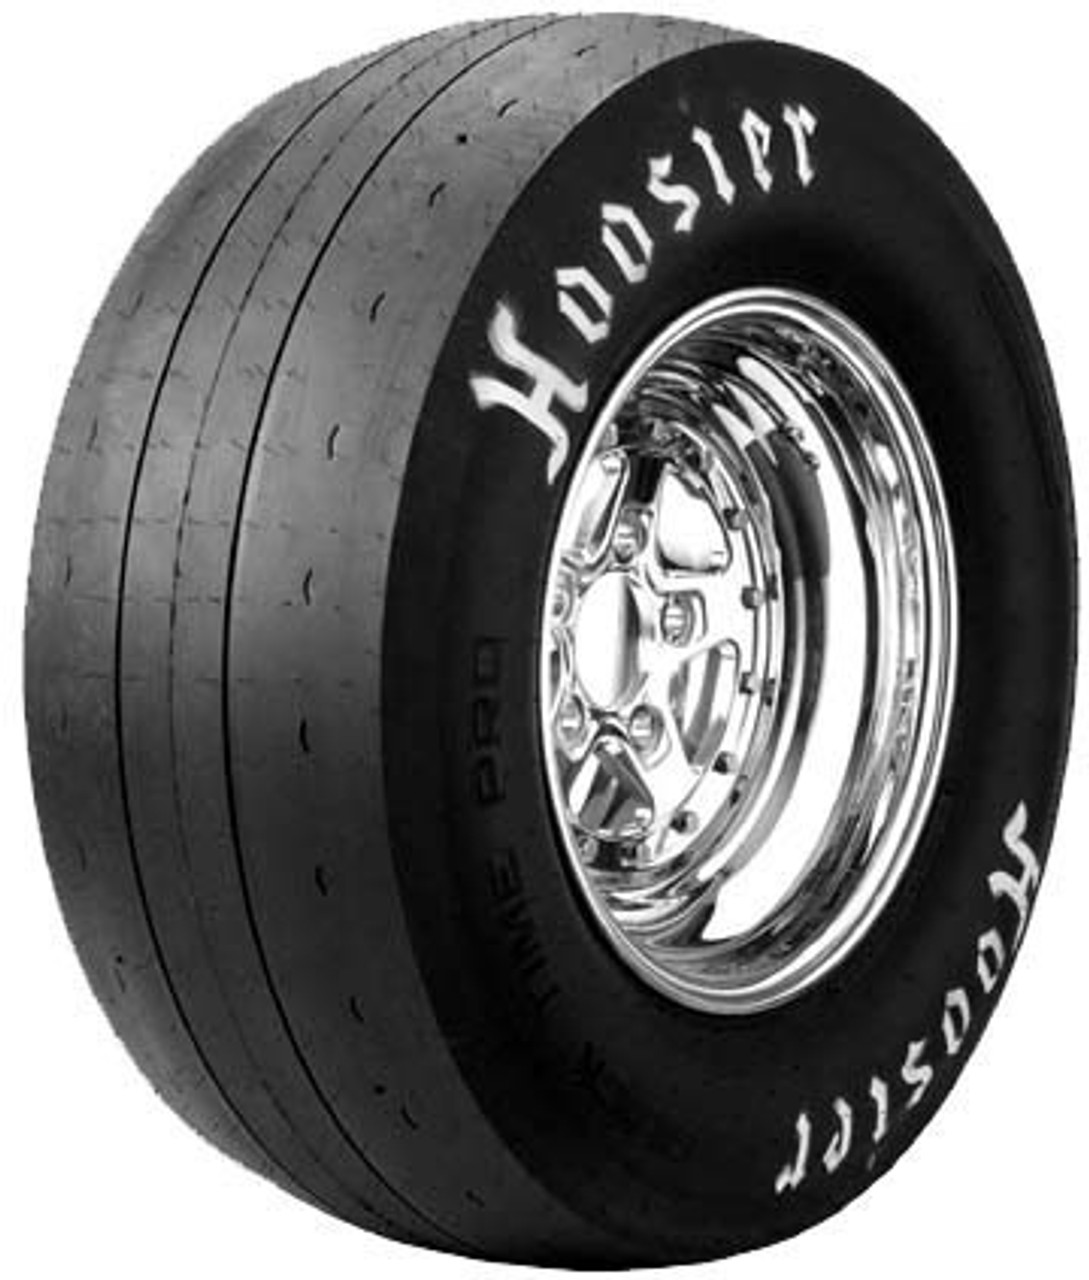 Hoosier Quick Time Pro  D.O.T. Drag Racing Tire 33 X 22.50-15 LT - 17910QTPRO